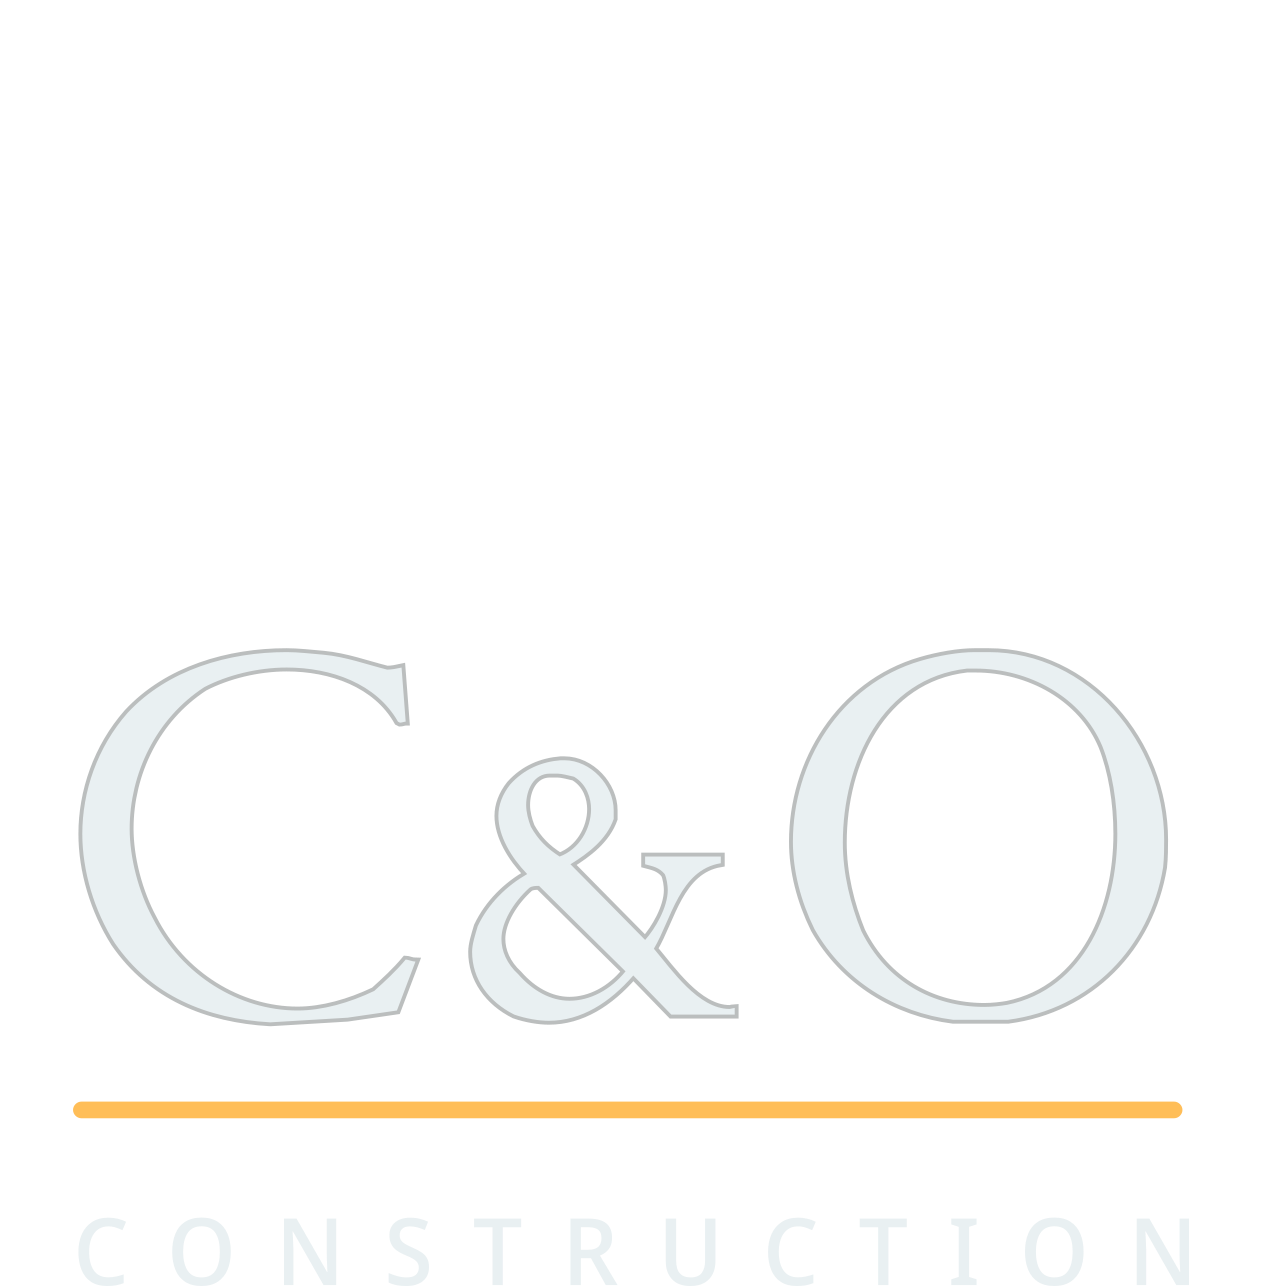 C&O Construction 's logo